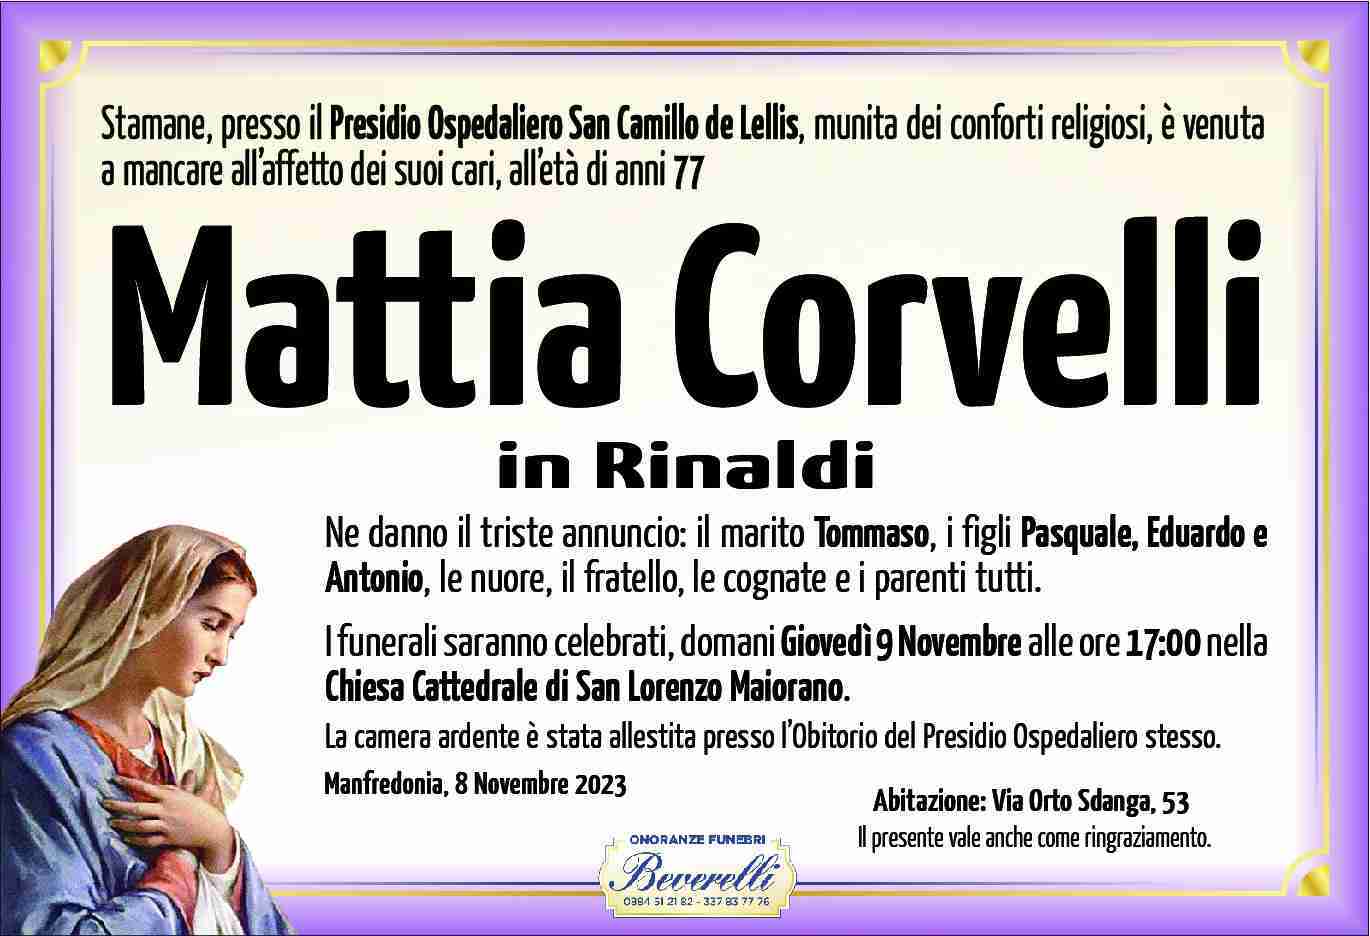 Mattia Corvelli